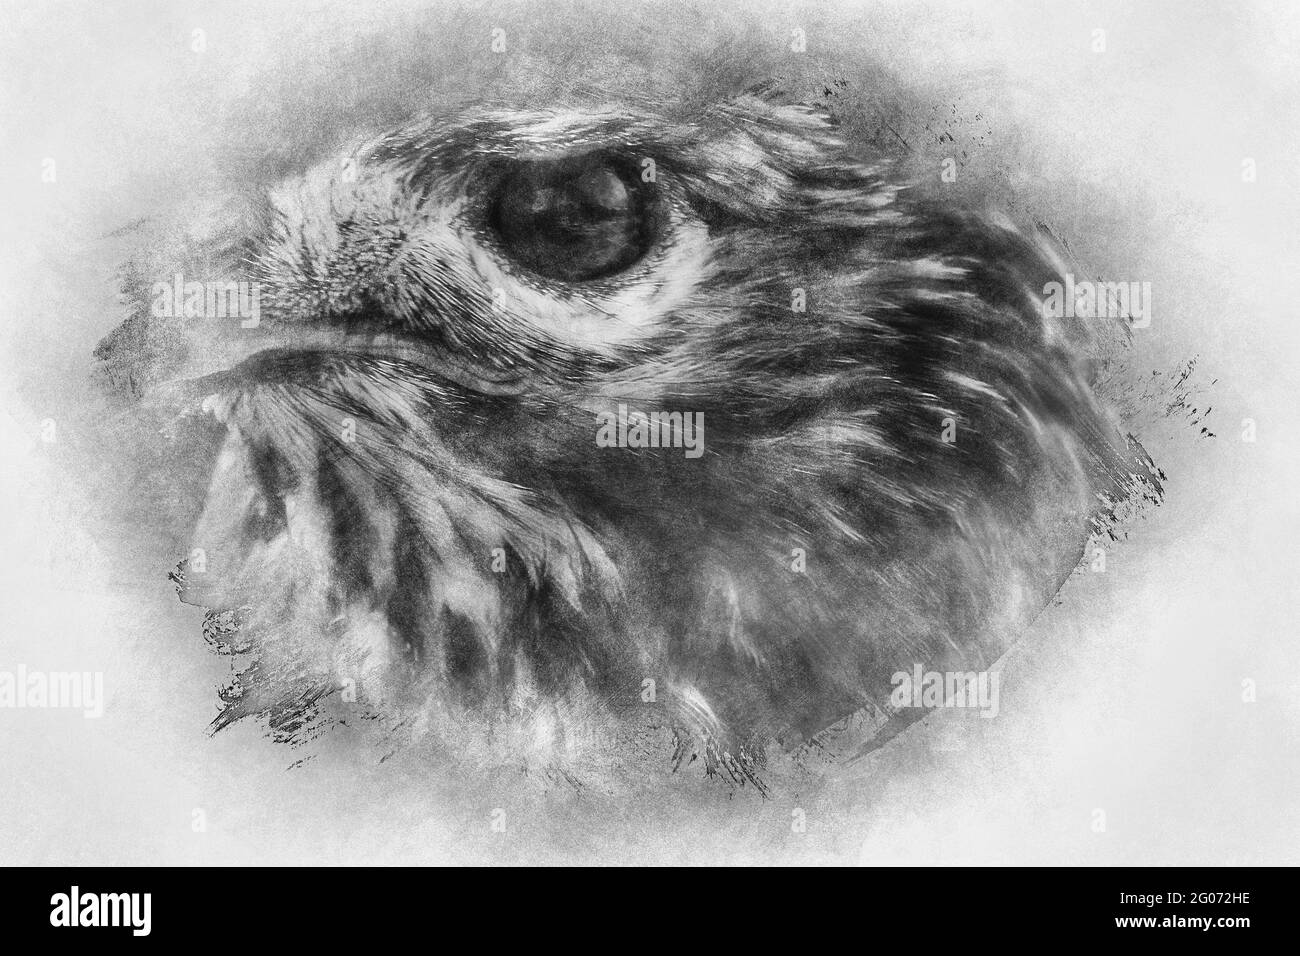 fauna, eagle, diurnal bird of prey with beautiful plumage and yellow beak black and white drawing Stock Photo